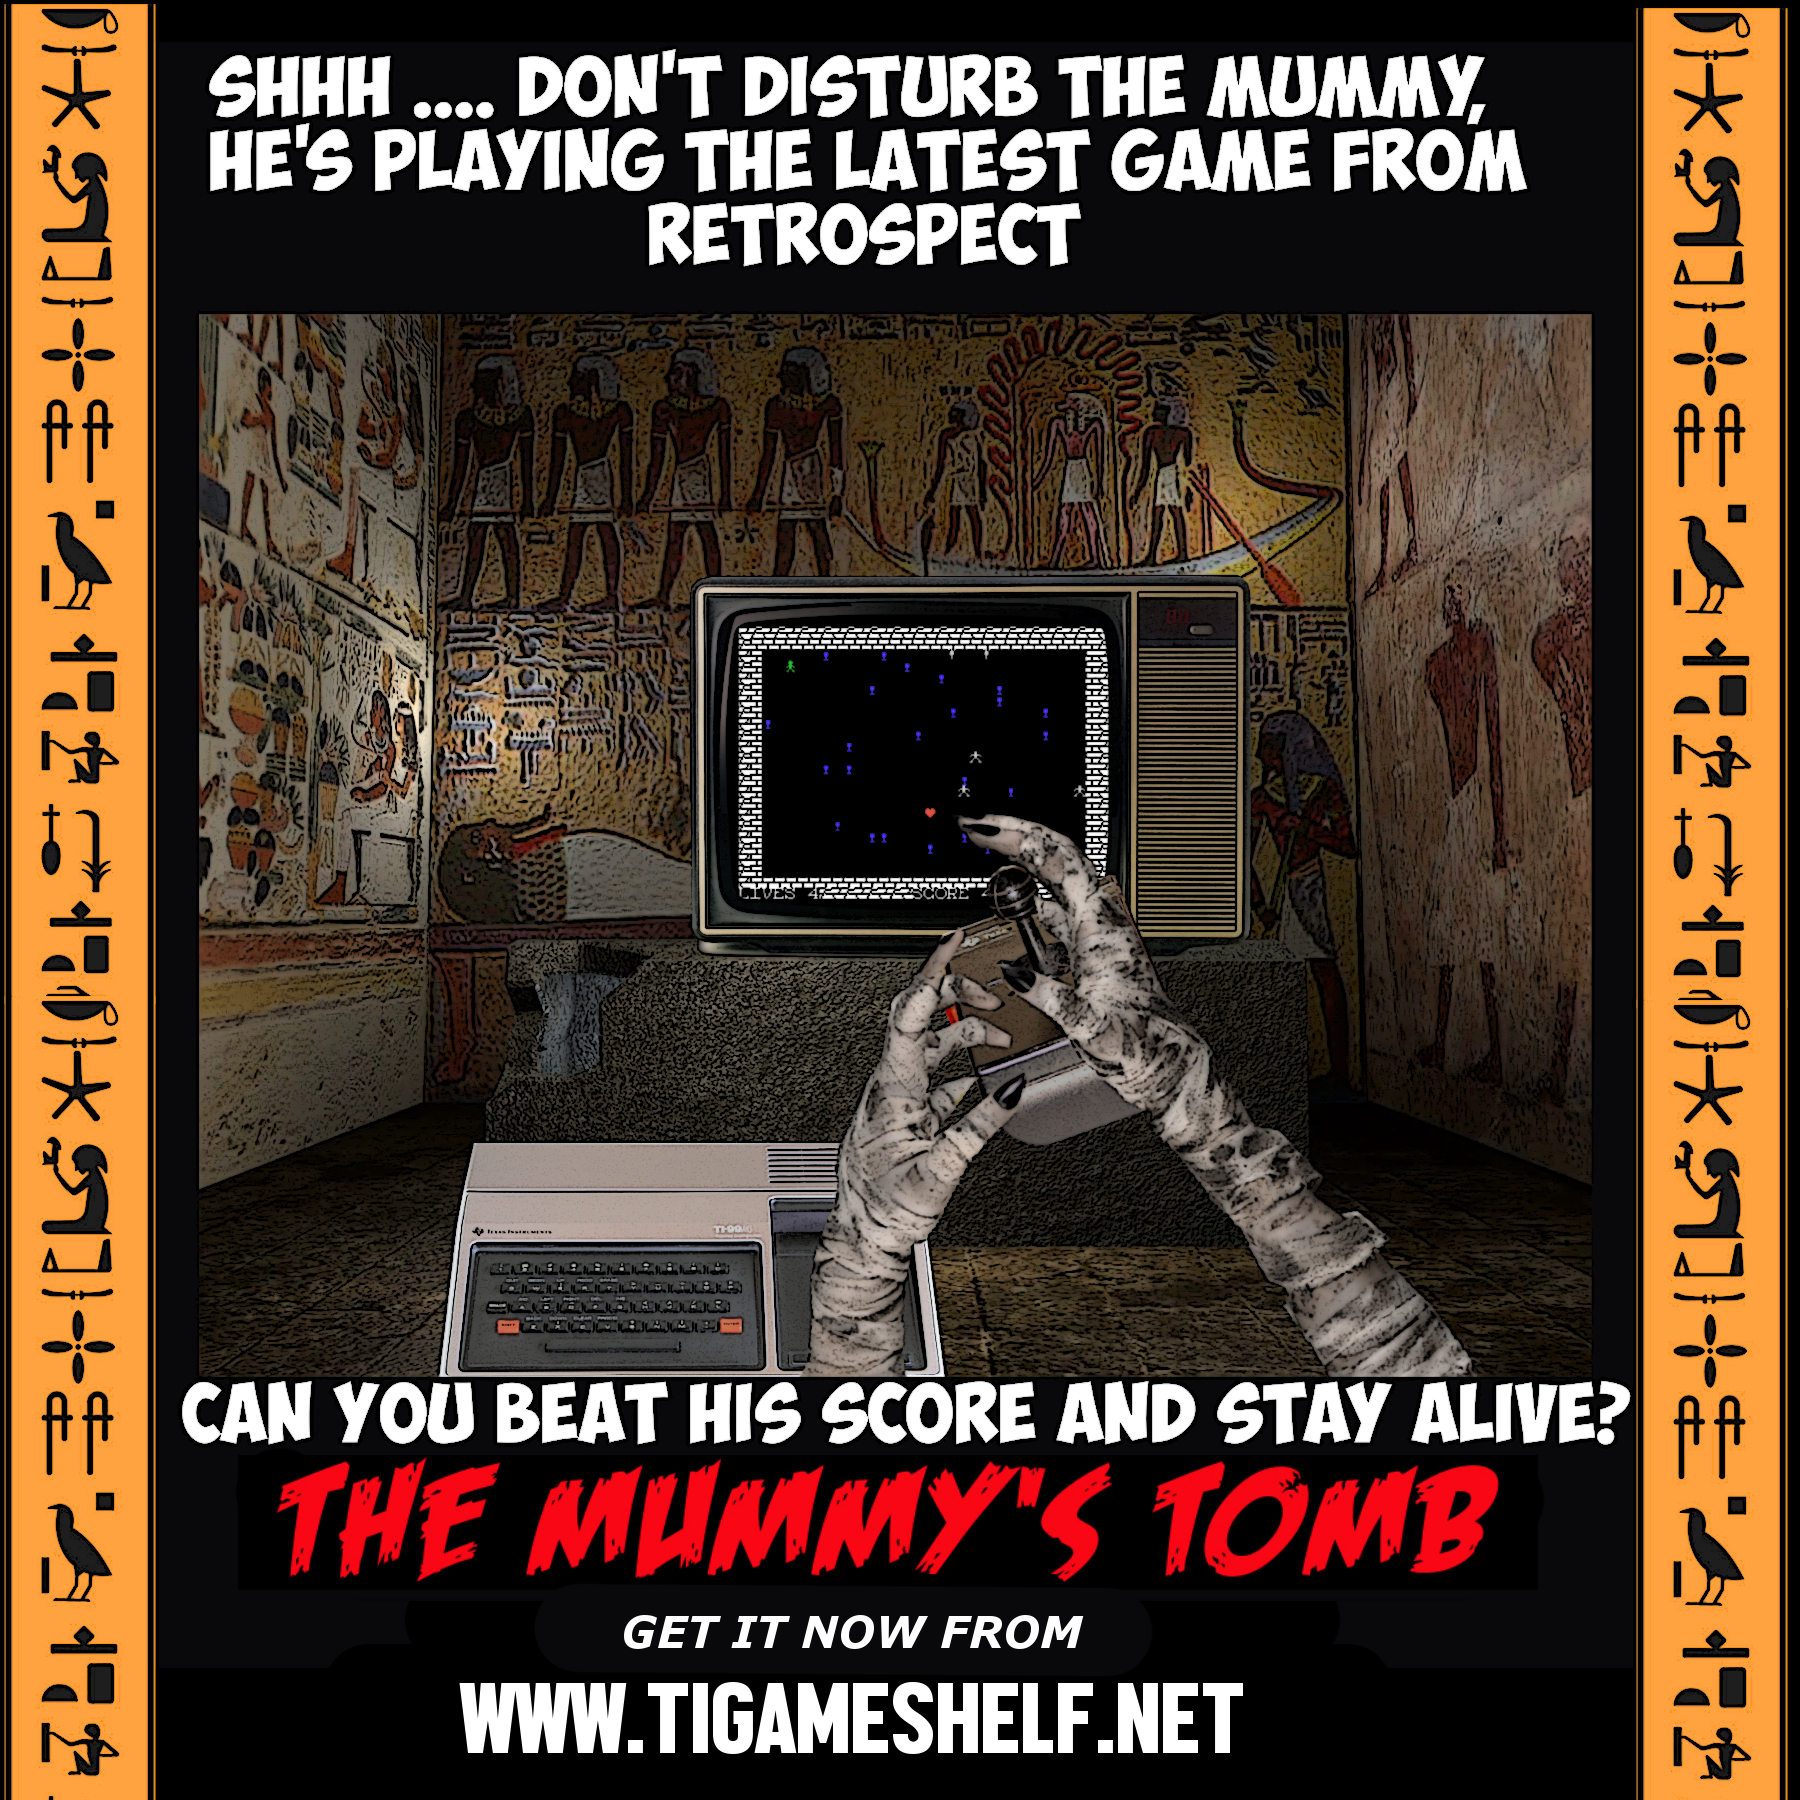 The Mummy's Tomb advertisement